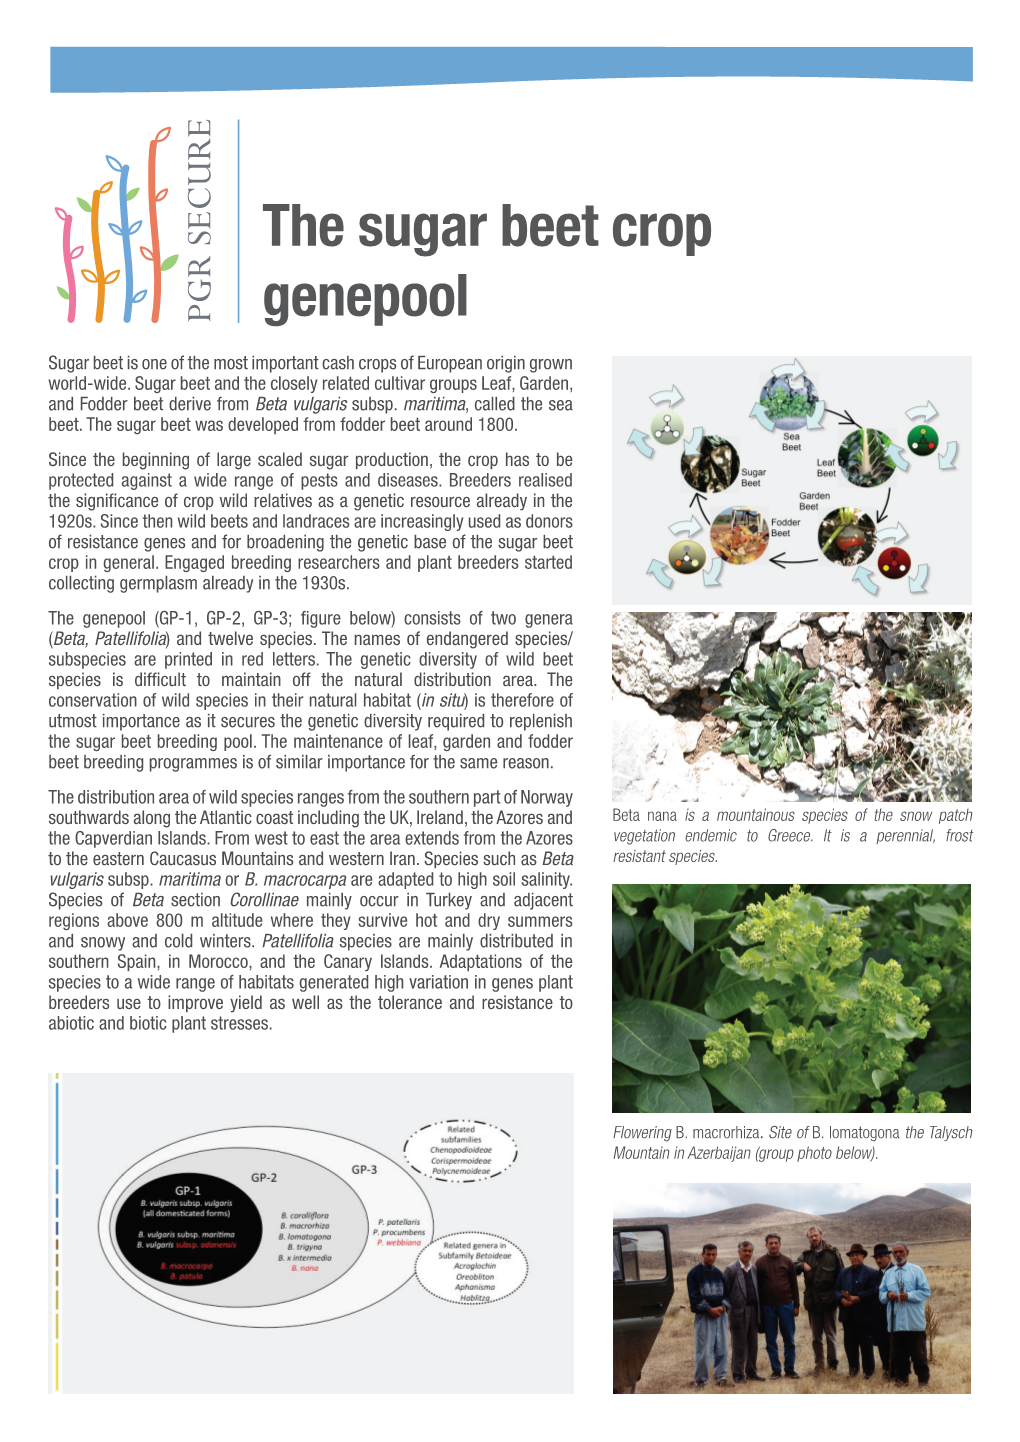 The Sugar Beet Crop Genepool